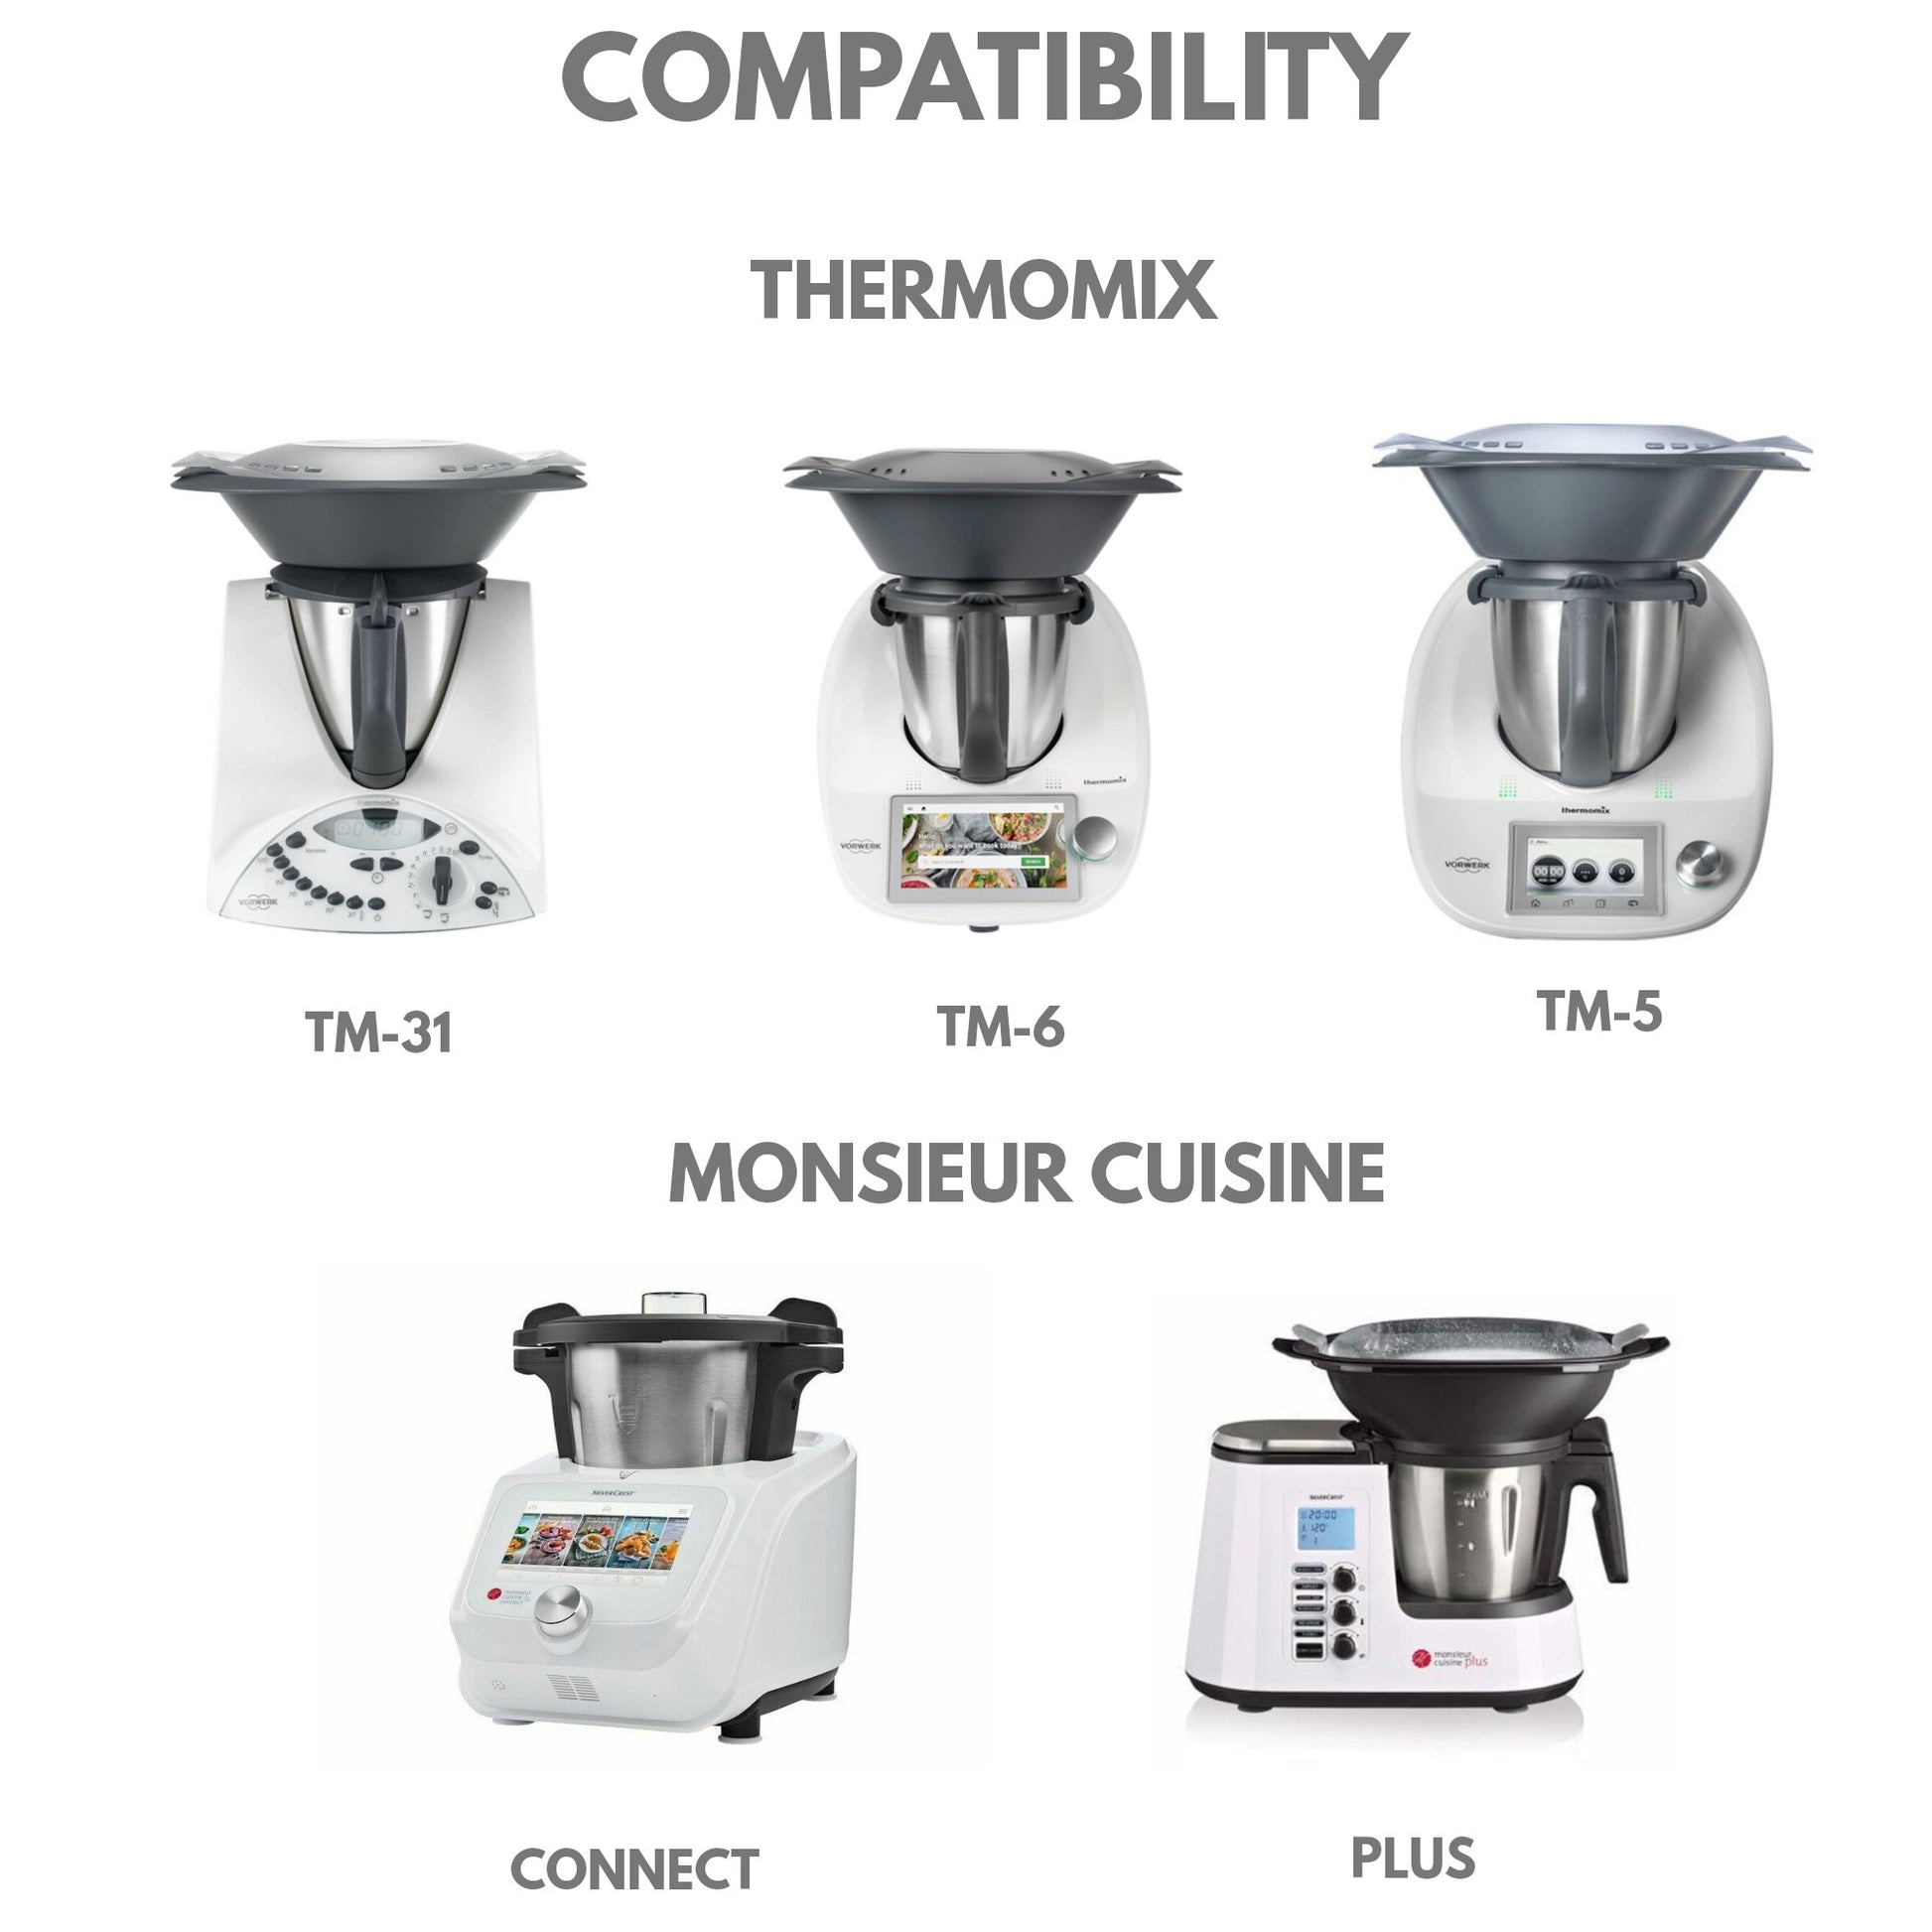 Bimbuto - Funnel for Thermomix TM31, TM5, TM6 and Monsieur Cuisine